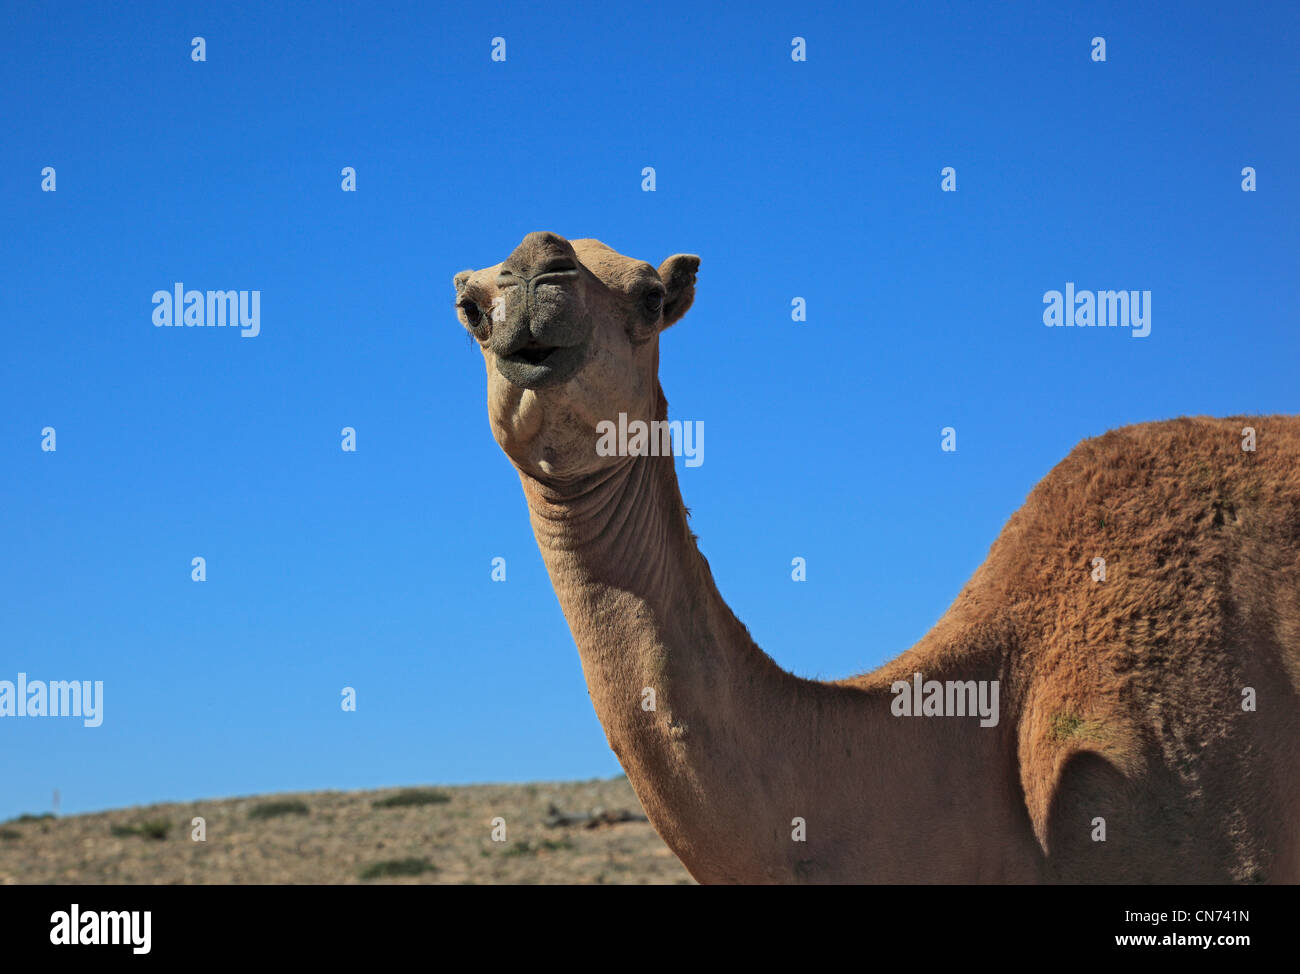 Kamele, Oman Stock Photo